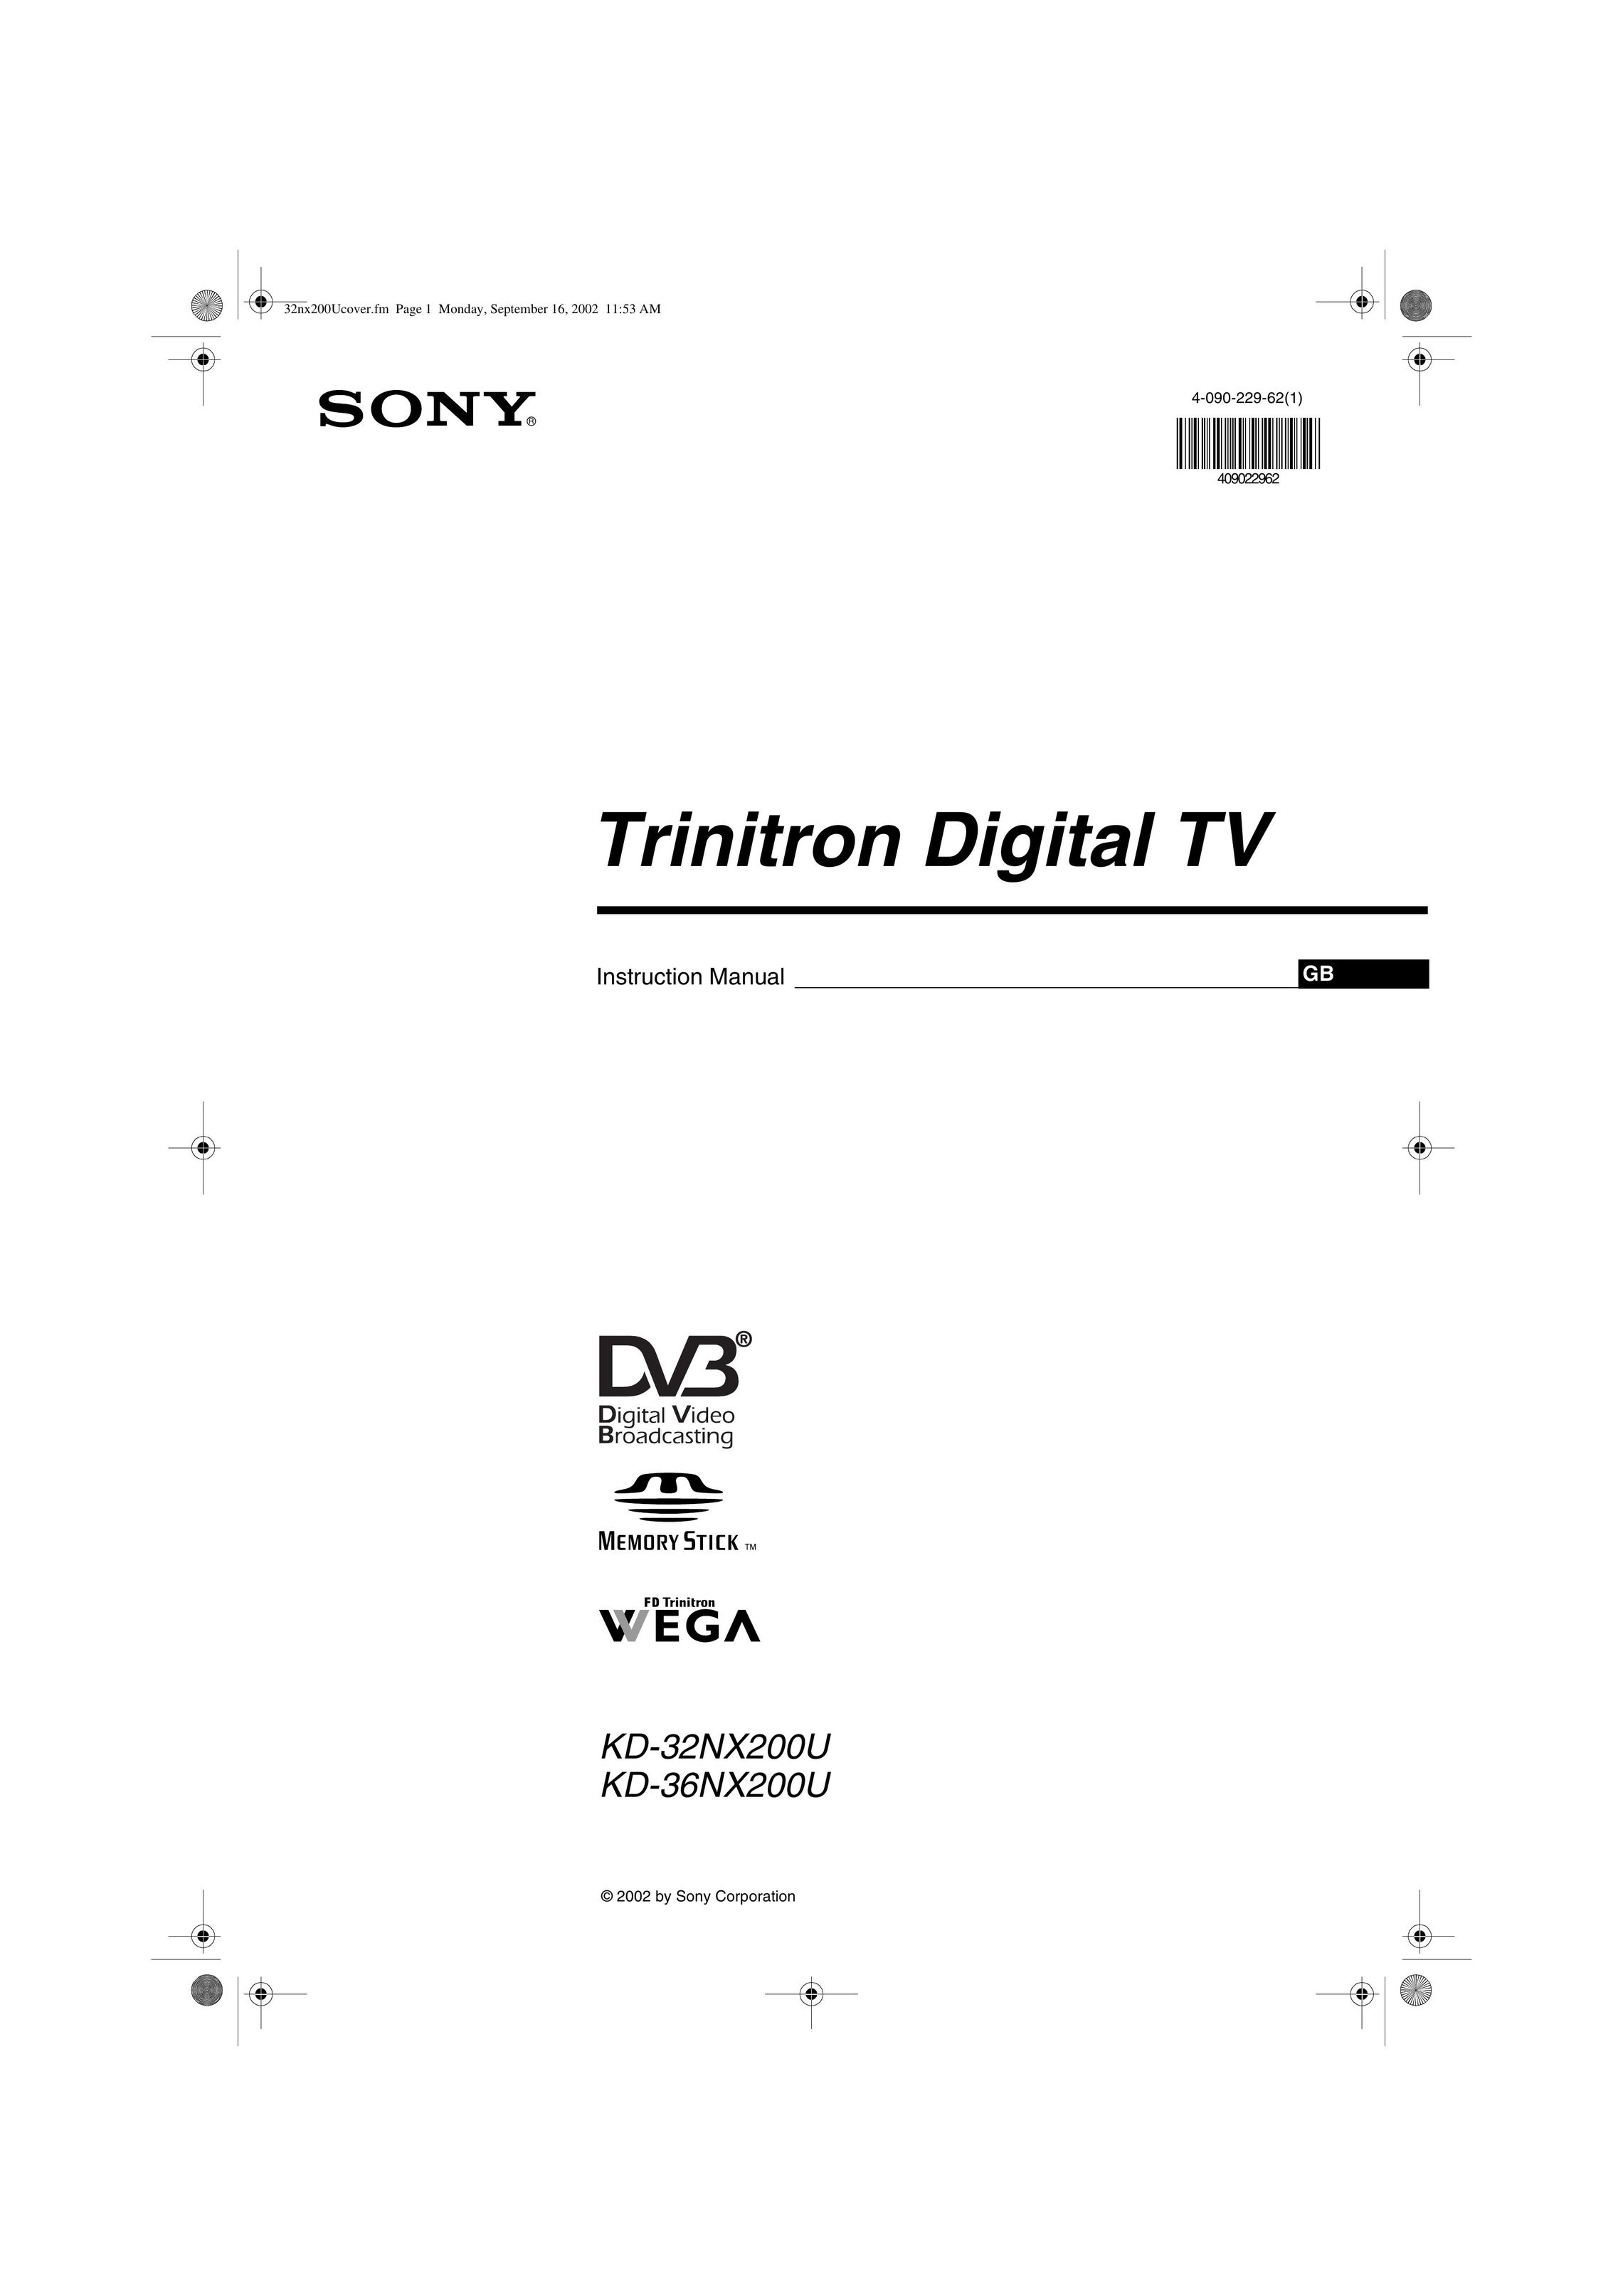 Sony KD-36NX200U TV Receiver User Manual